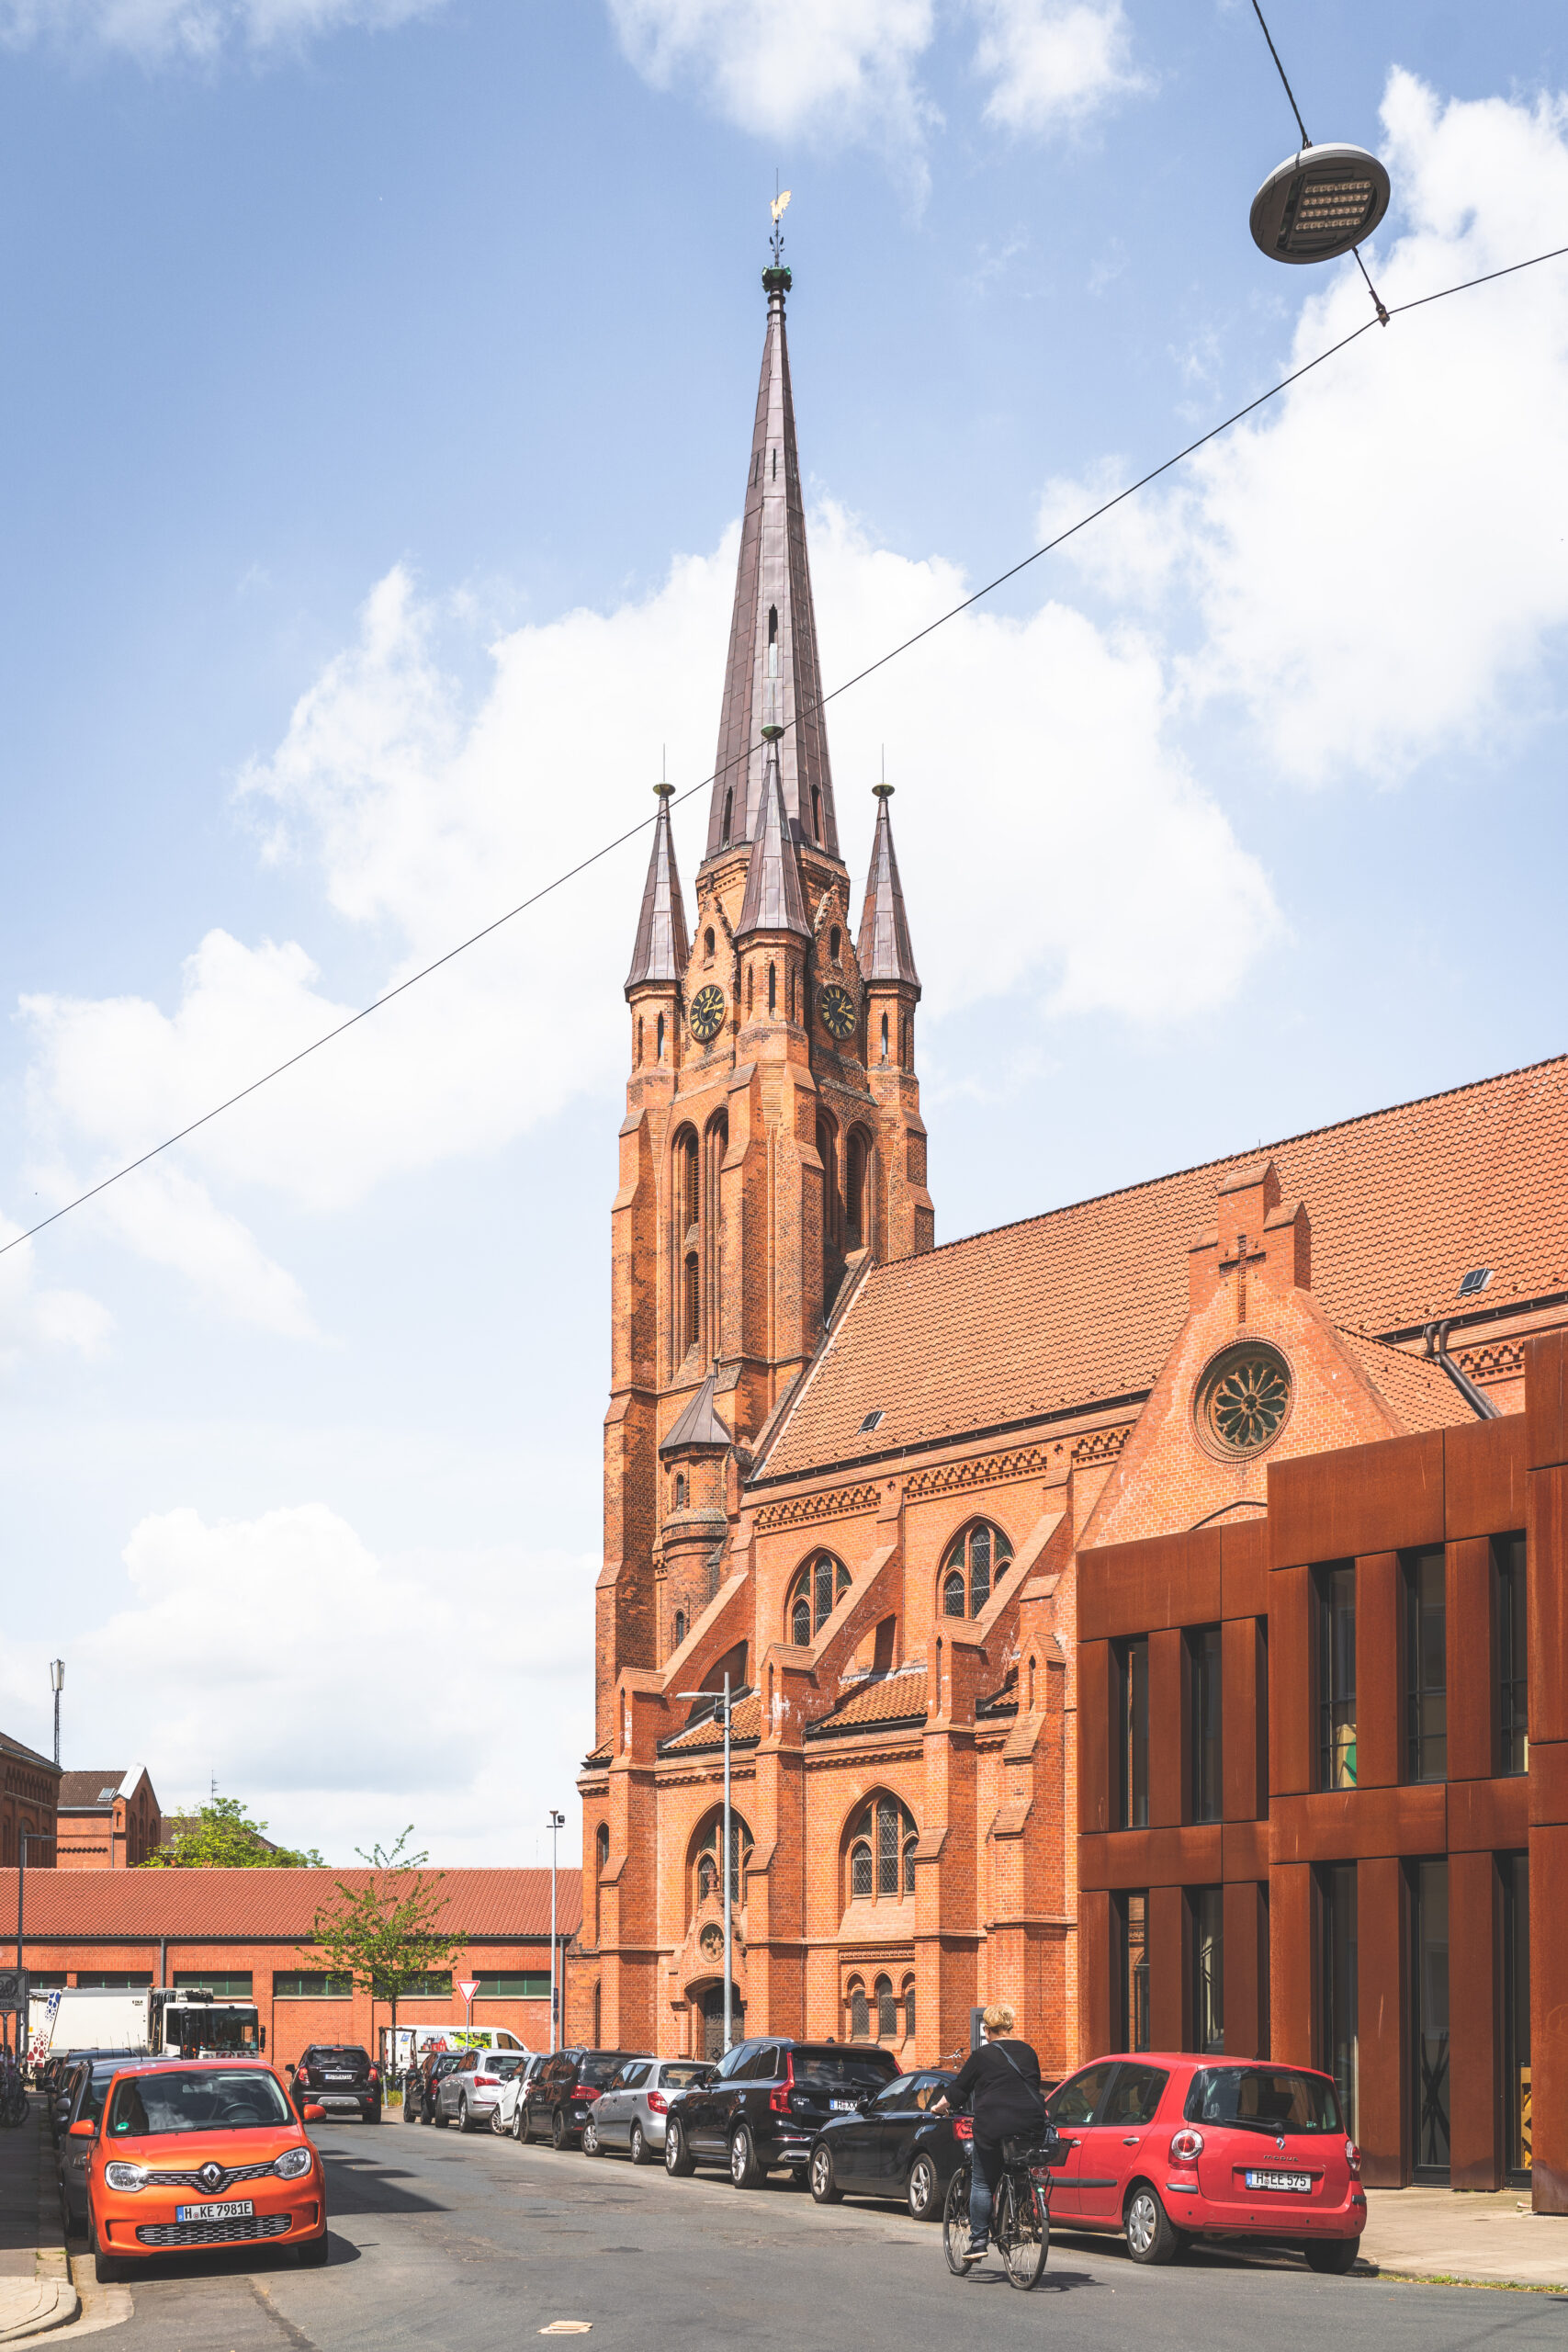 A brick church in Hannover